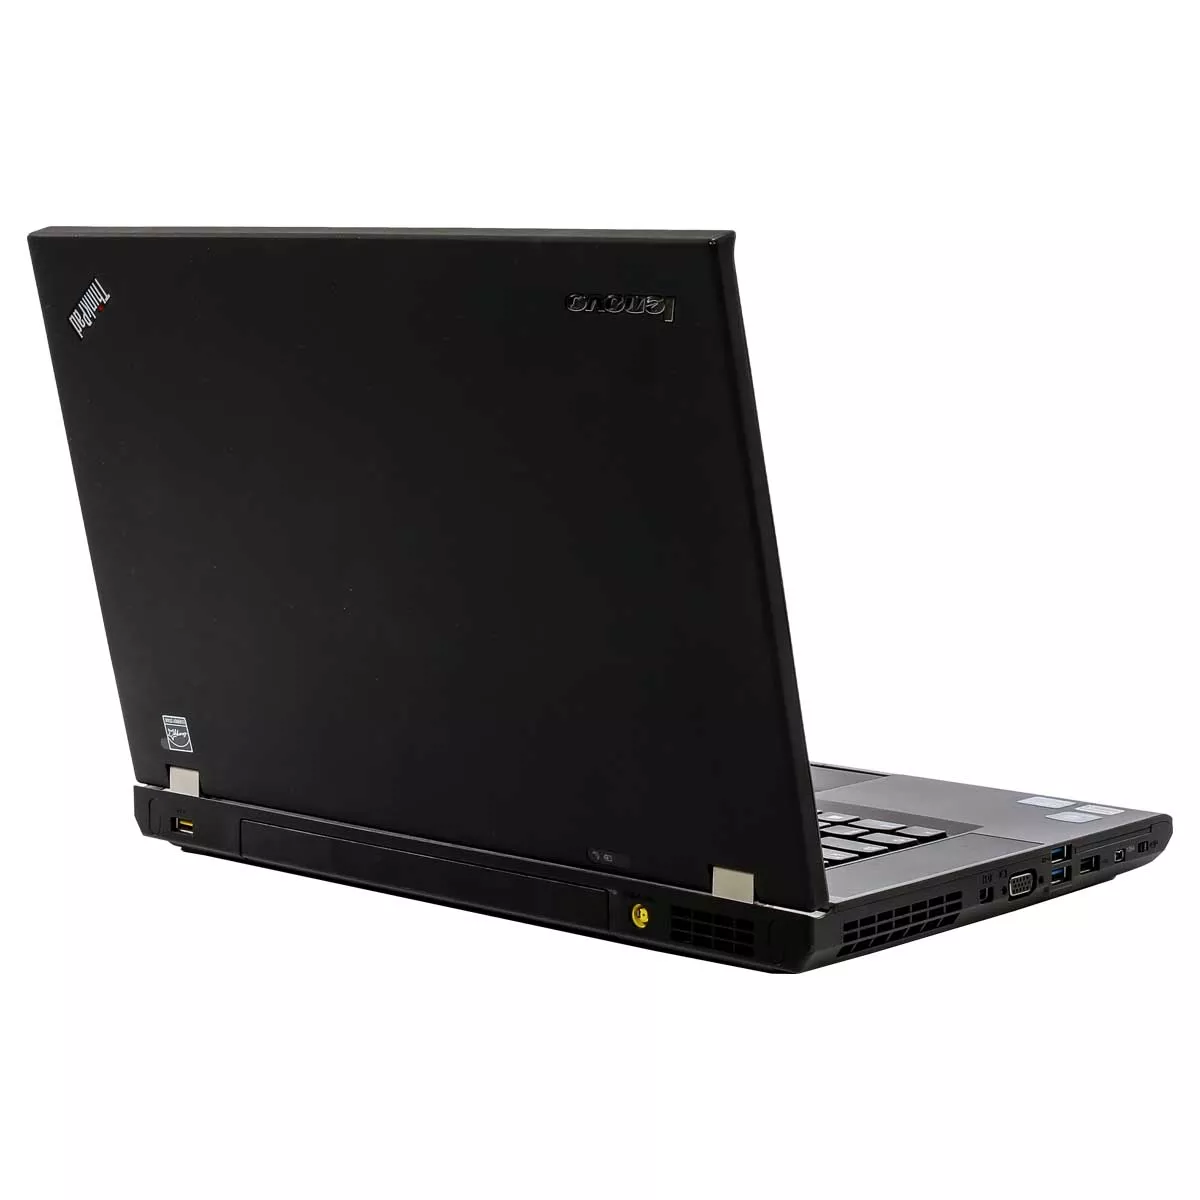 Lenovo ThinkPad W520 Quad Core i7 2720QM 2,2 GHz Webcam B-Ware